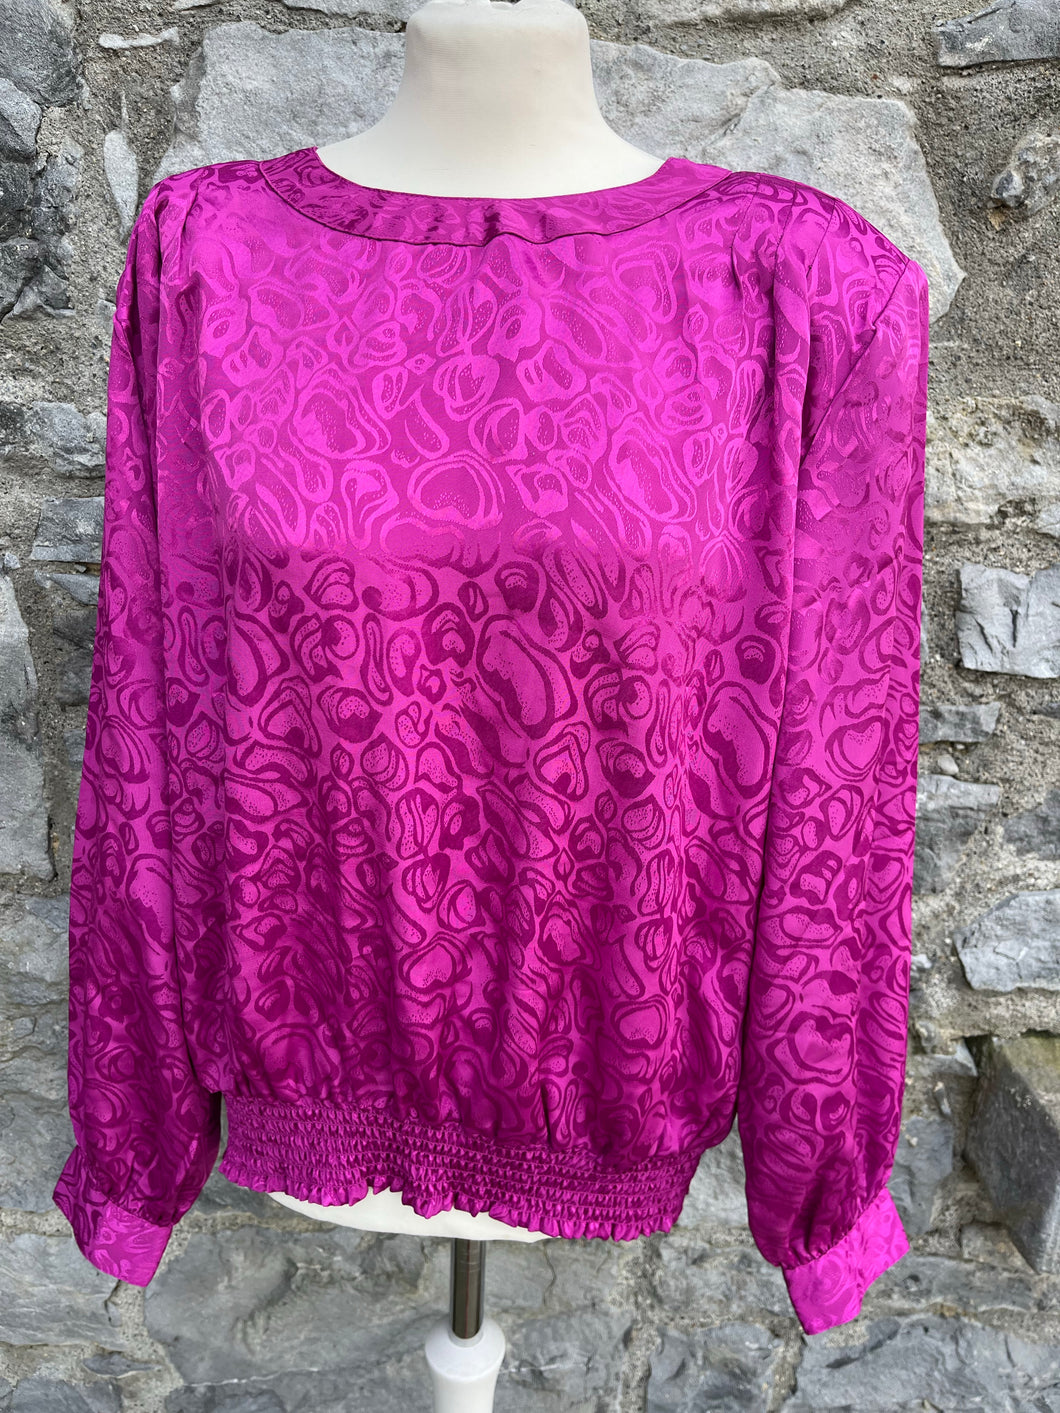 80s pink blouse uk 14-18